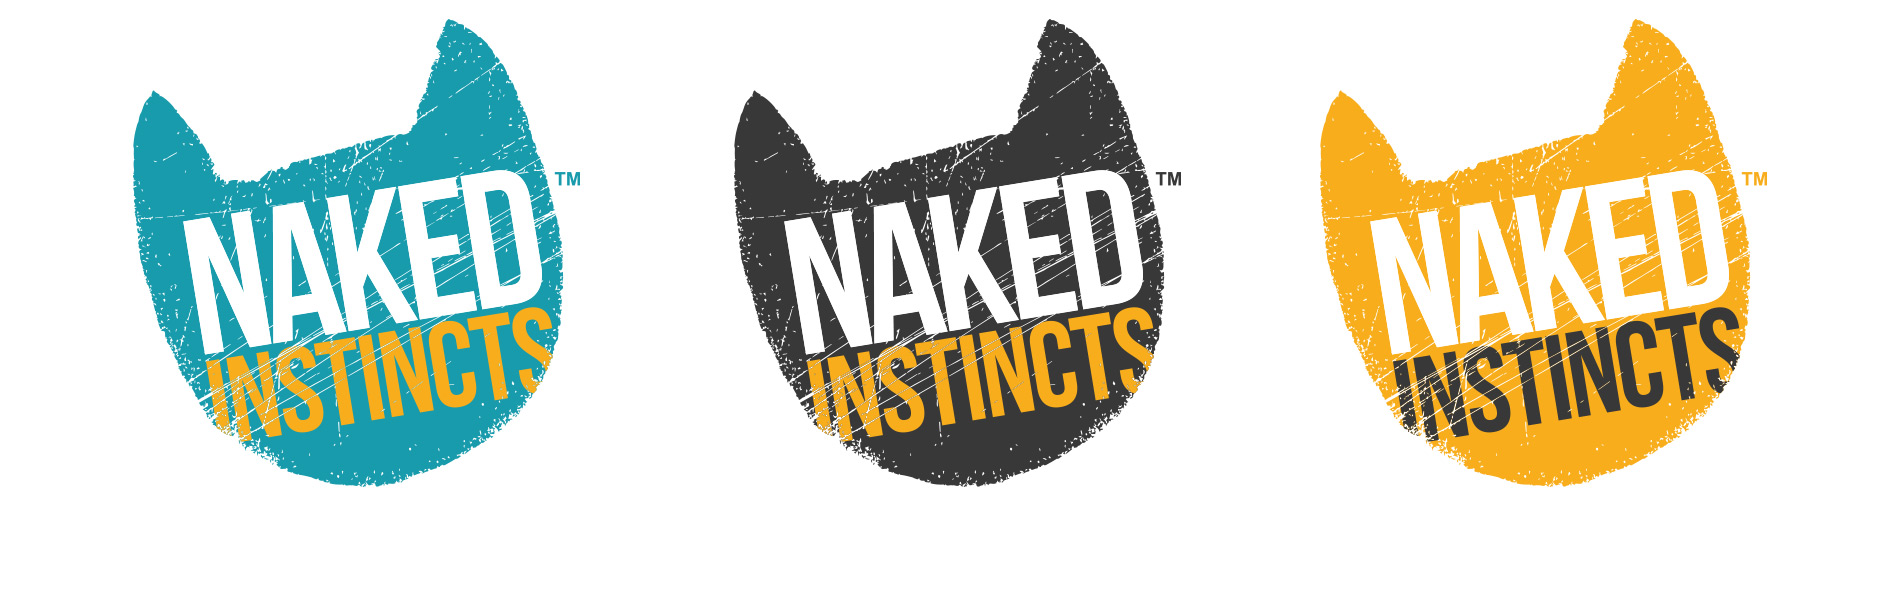 3 Naked Instincts Logos